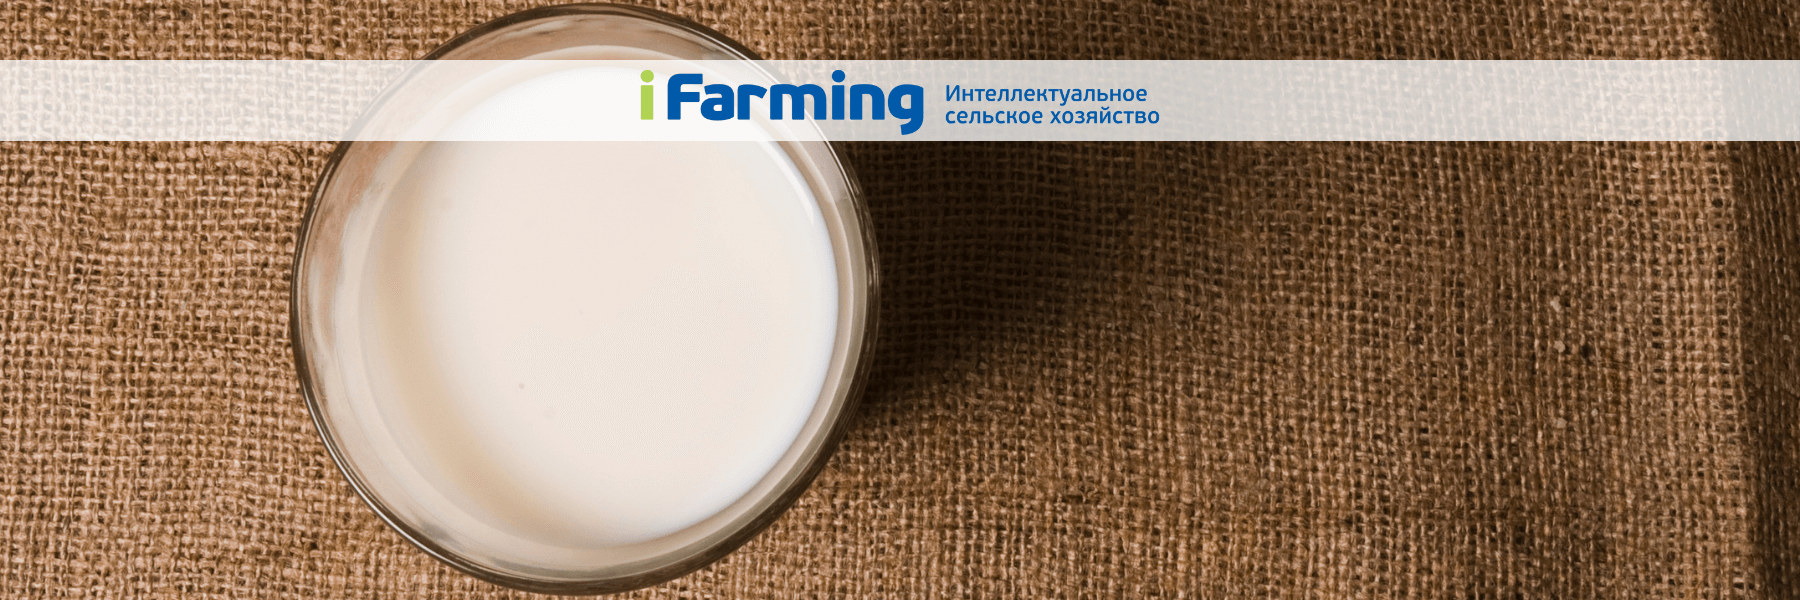 Субсидия на поддержку производства молока